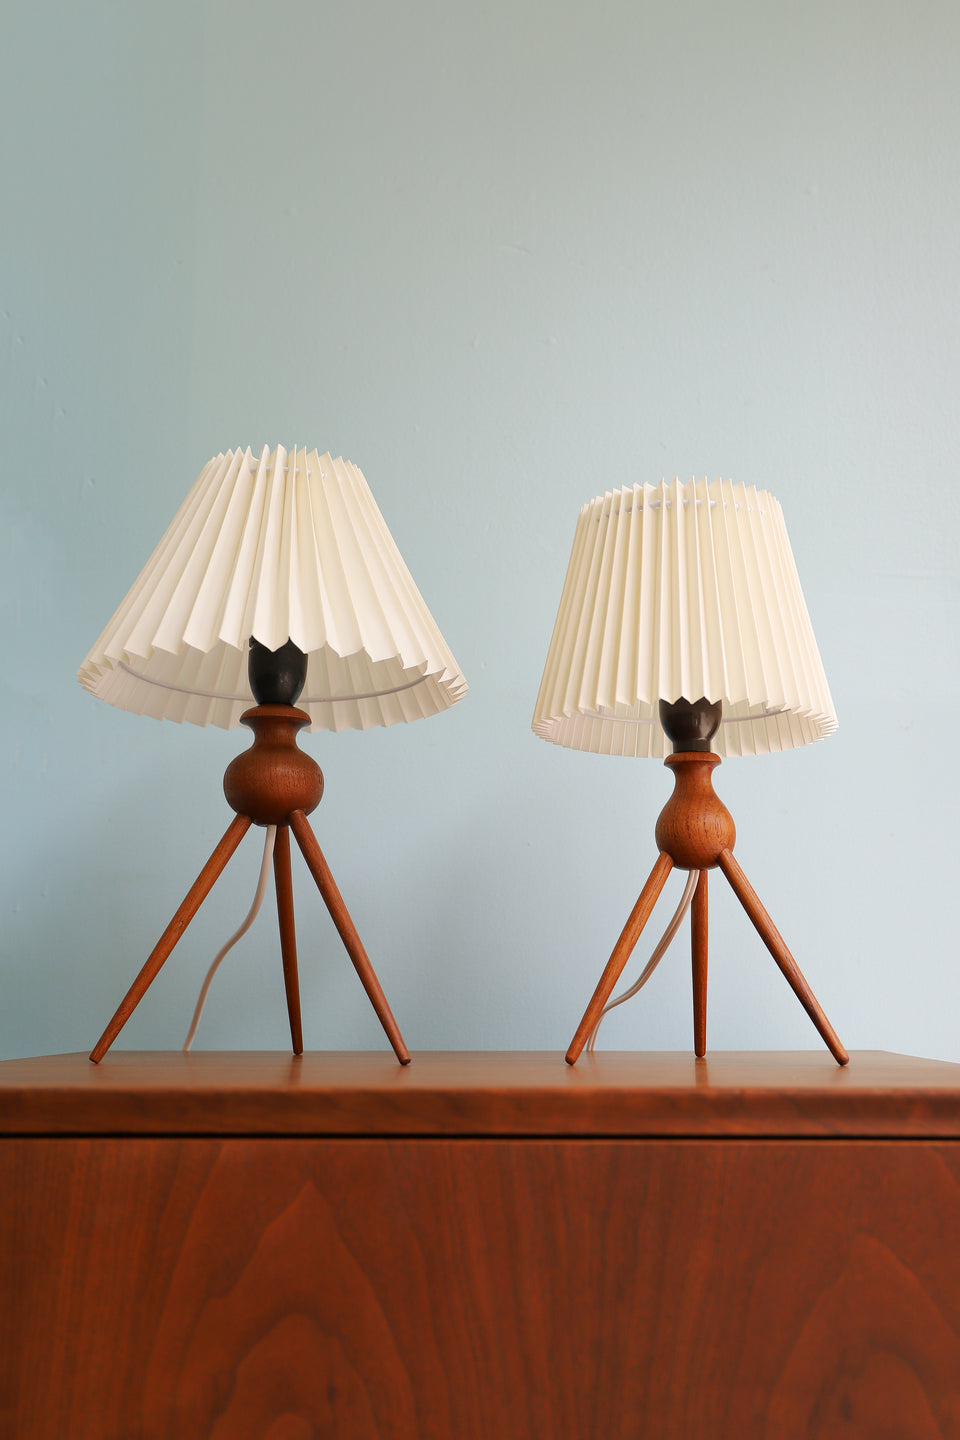 Teakwood Tripod Table Lamp Danish Vintage/デンマークヴィンテージ テーブルランプ チーク材 間接照明 北欧インテリア